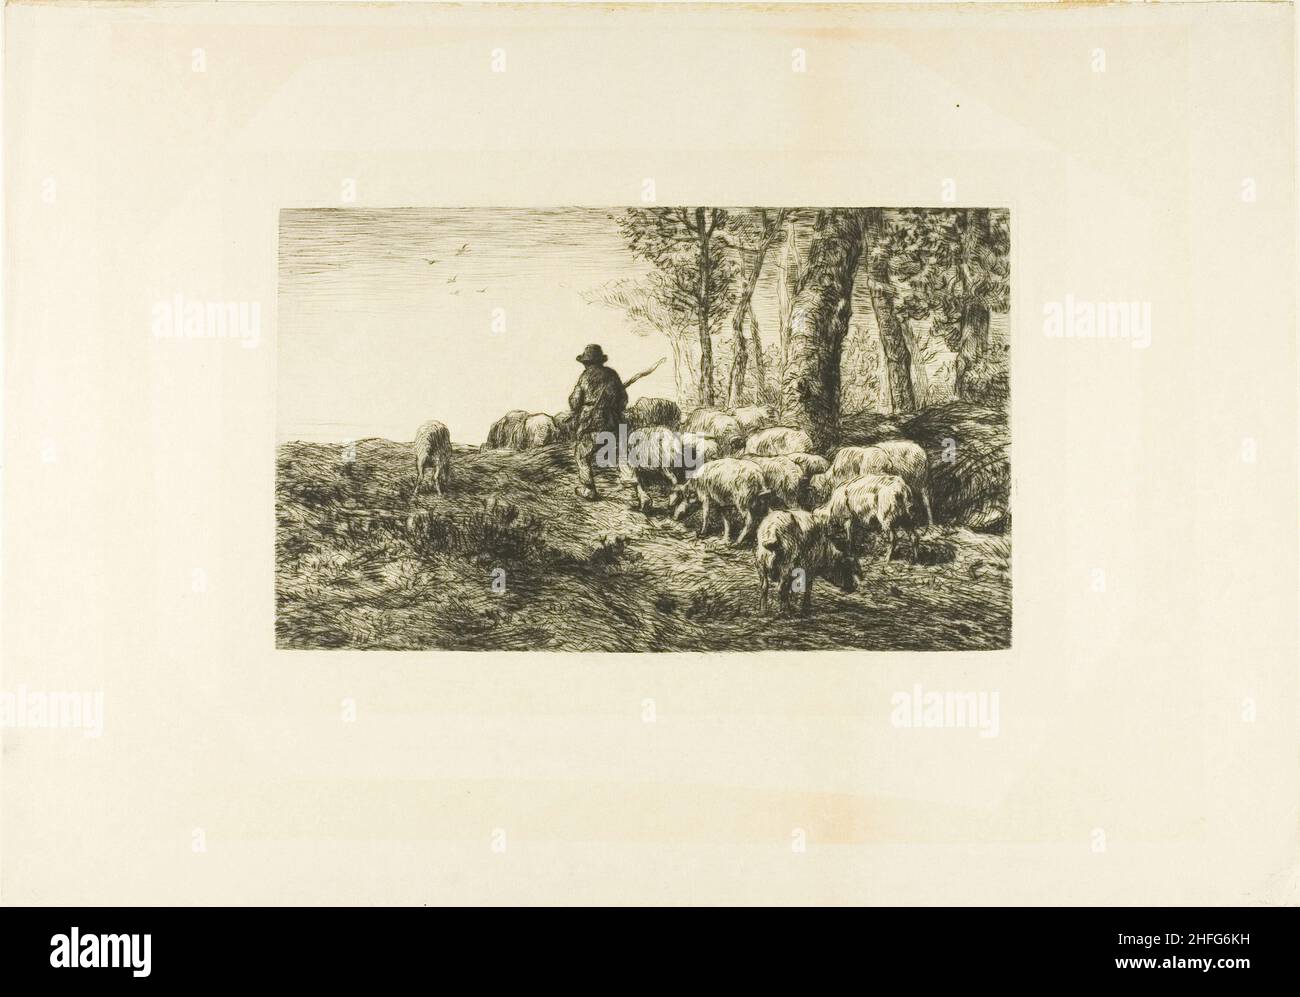 Herd of Pigs with Swineherd, 1878. Stock Photo